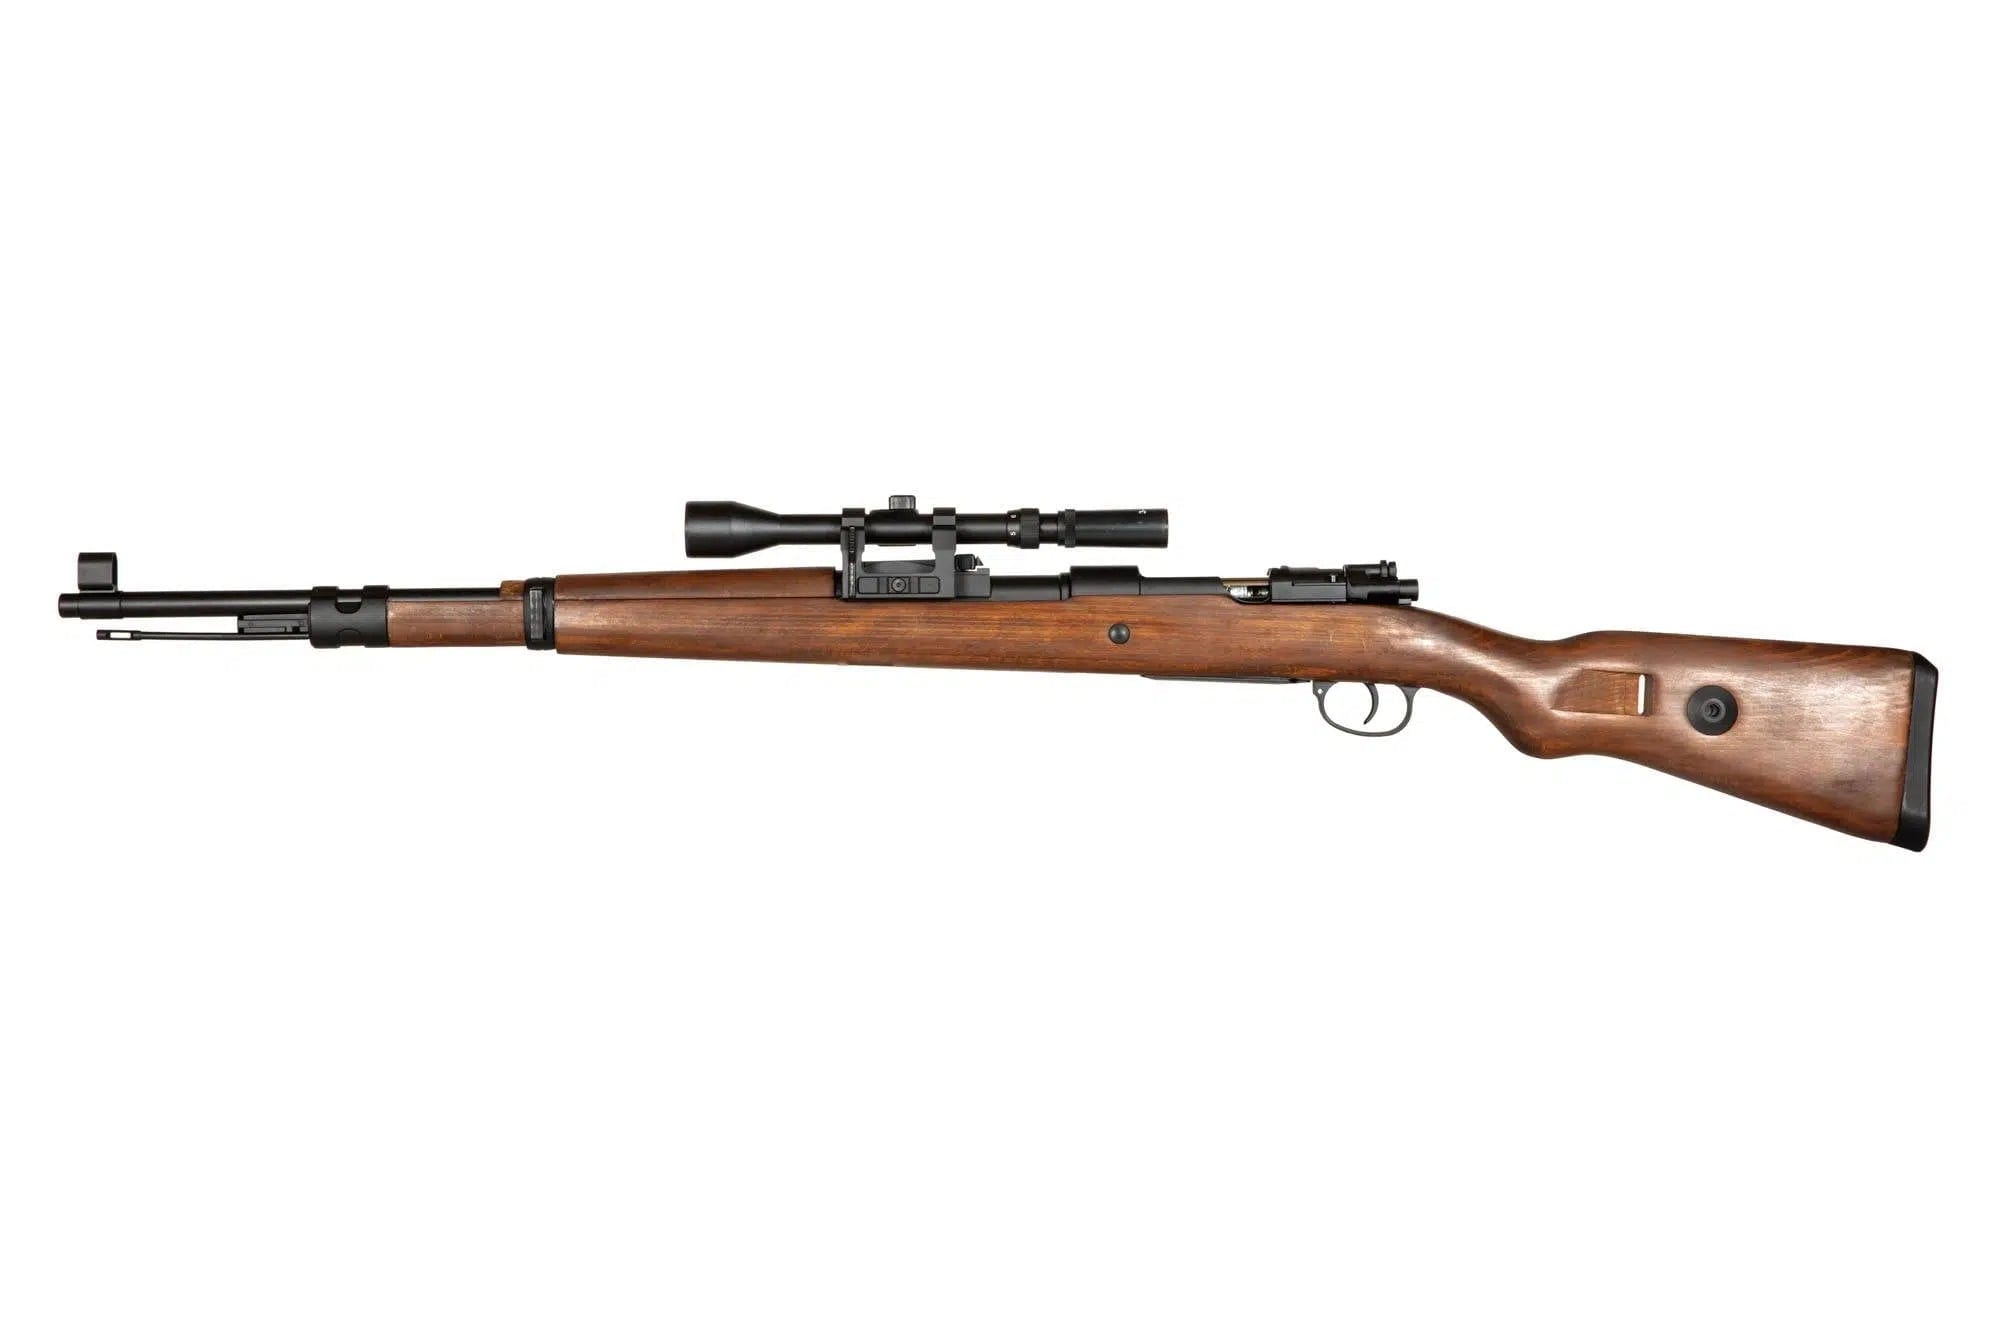 Kar98k rifle replica (spring loaded) wooden version + rifle scope